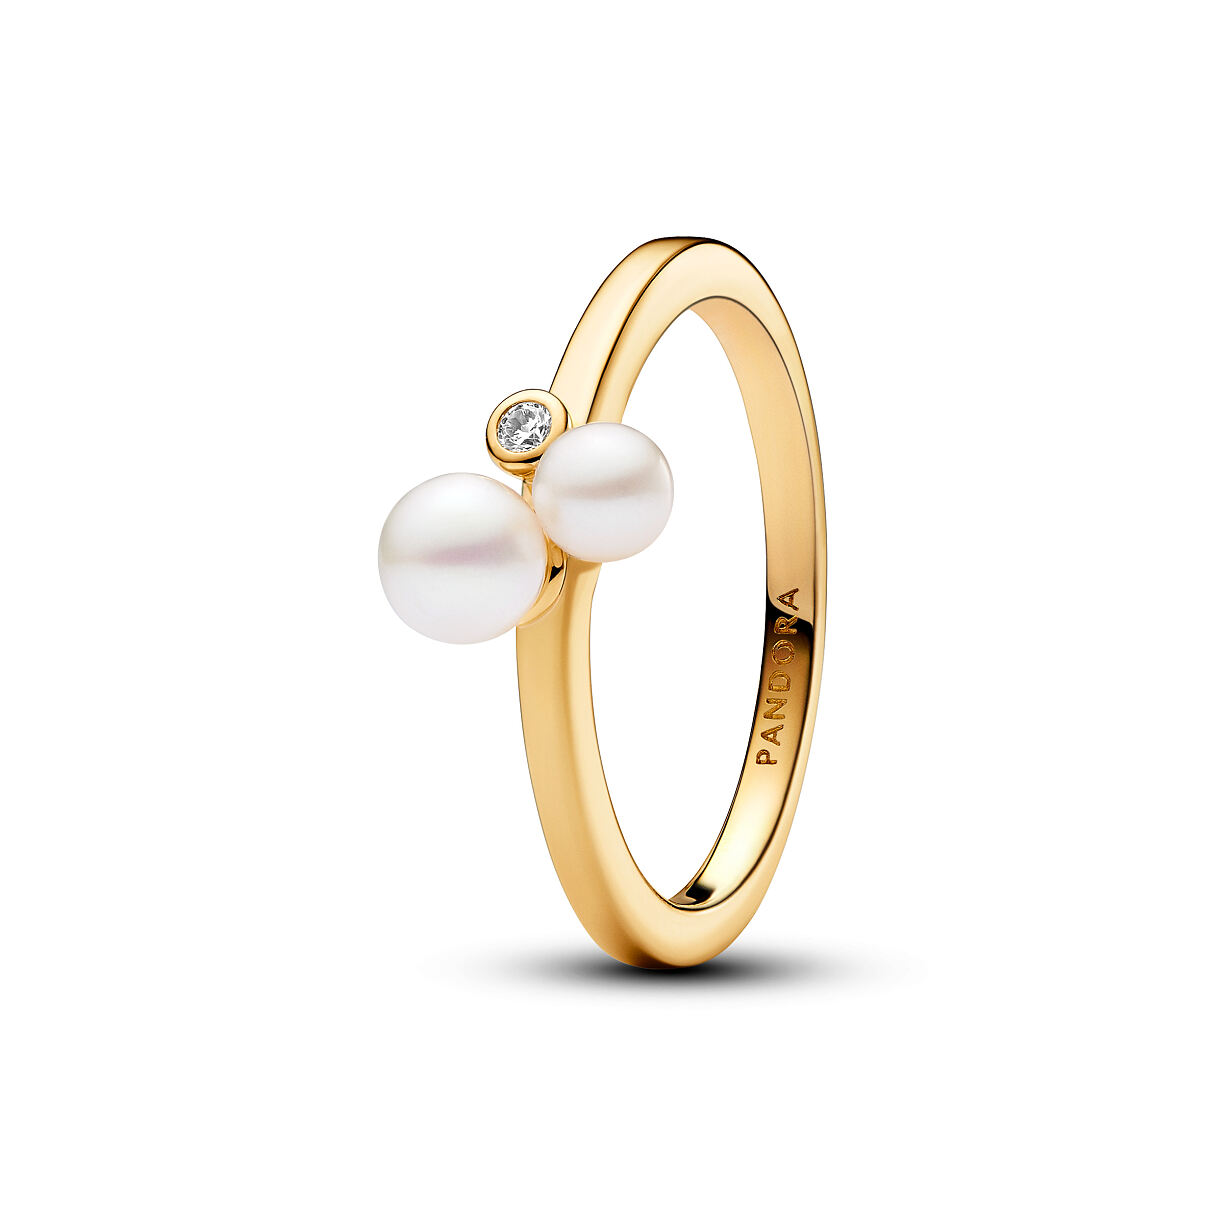 Pandora_Ring_14k Gold-plated_Freshwater Pearls_Cubic Zirconia_163156C01_99,00 Euro (2)